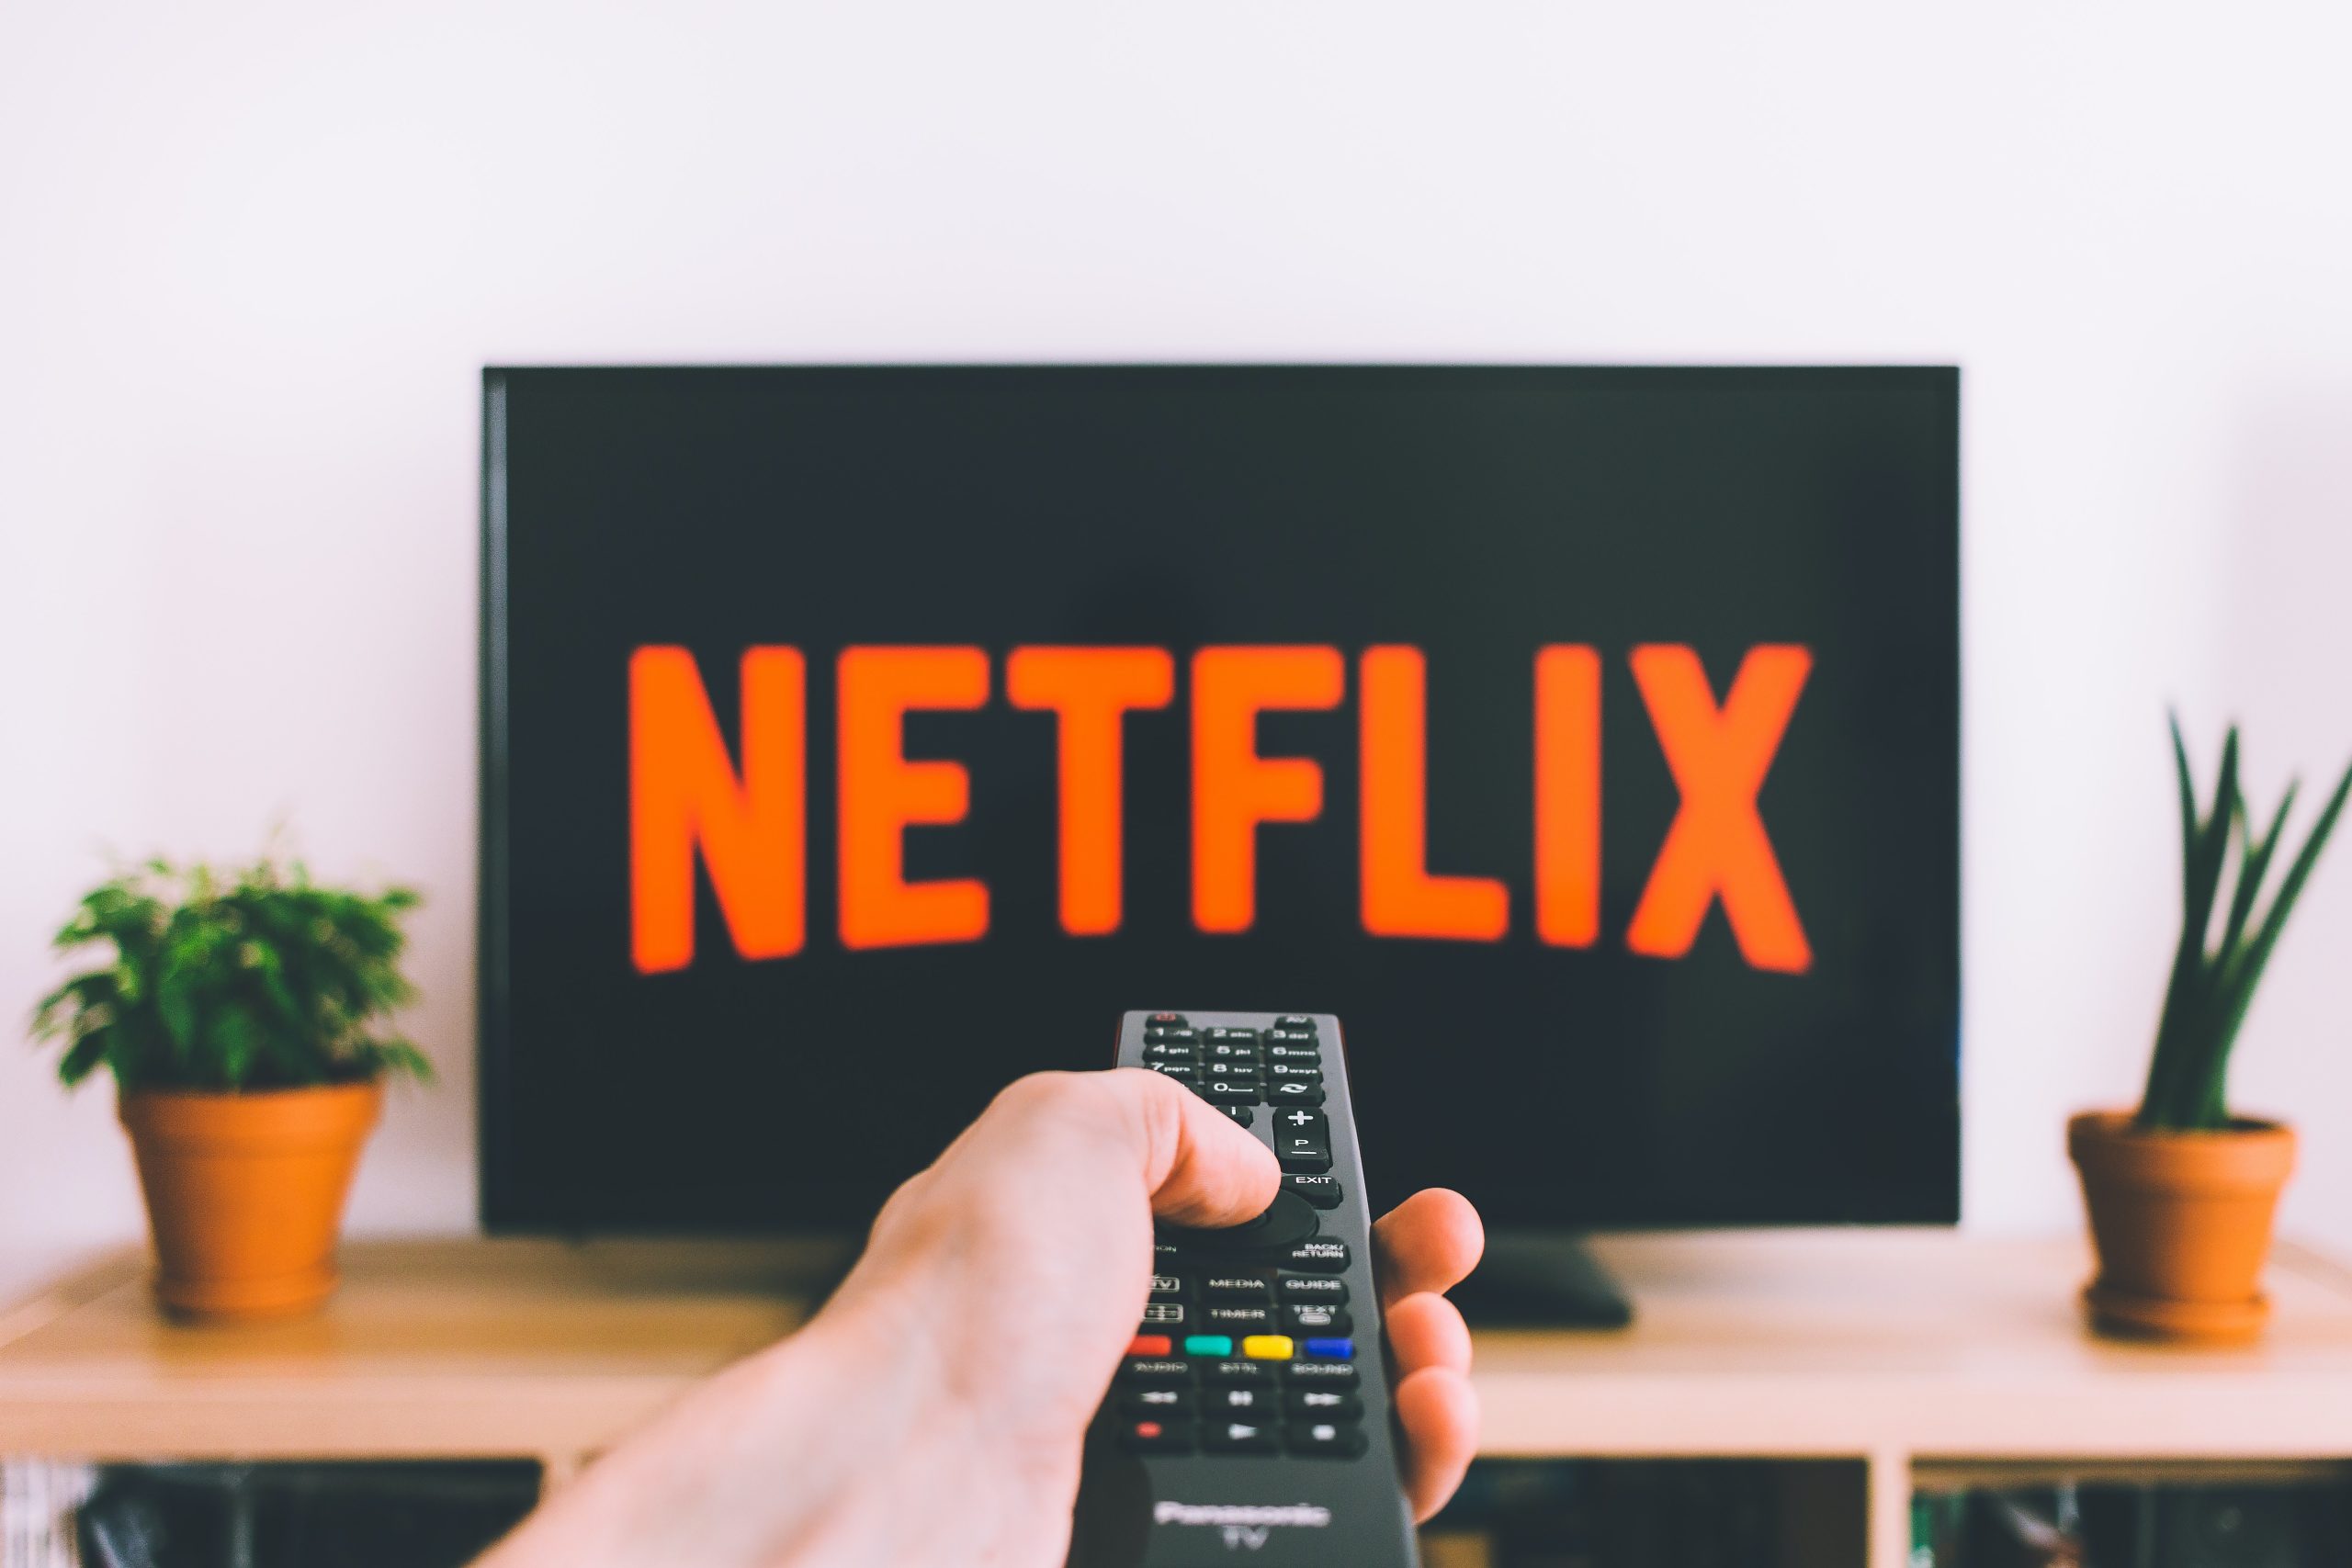 Biaya Streaming Netflix Turun, Ini Harga Terbarunya